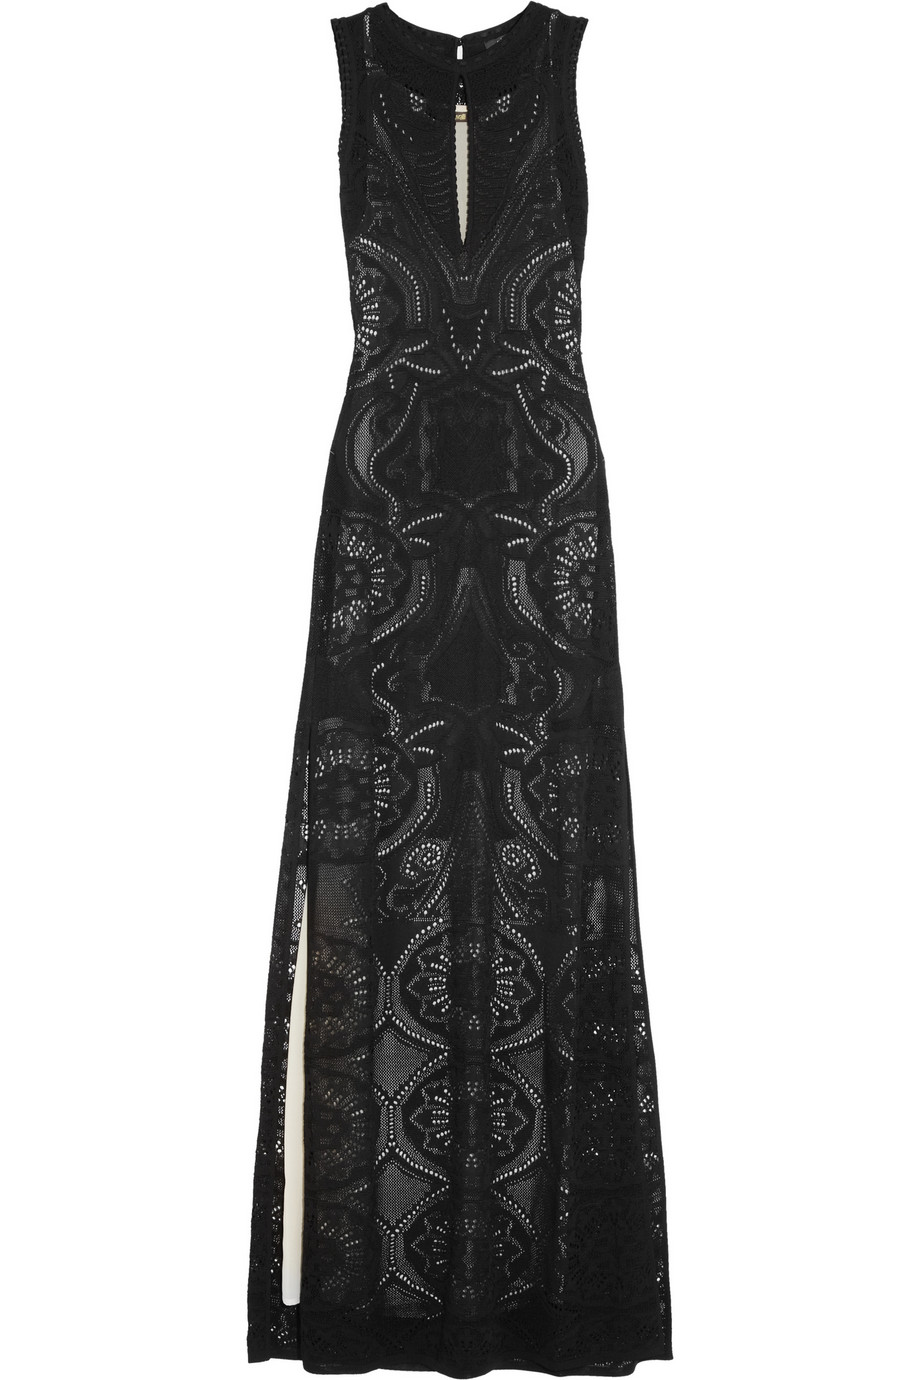 Lyst - Roberto cavalli Crocheted Lace Maxi Dress in Black